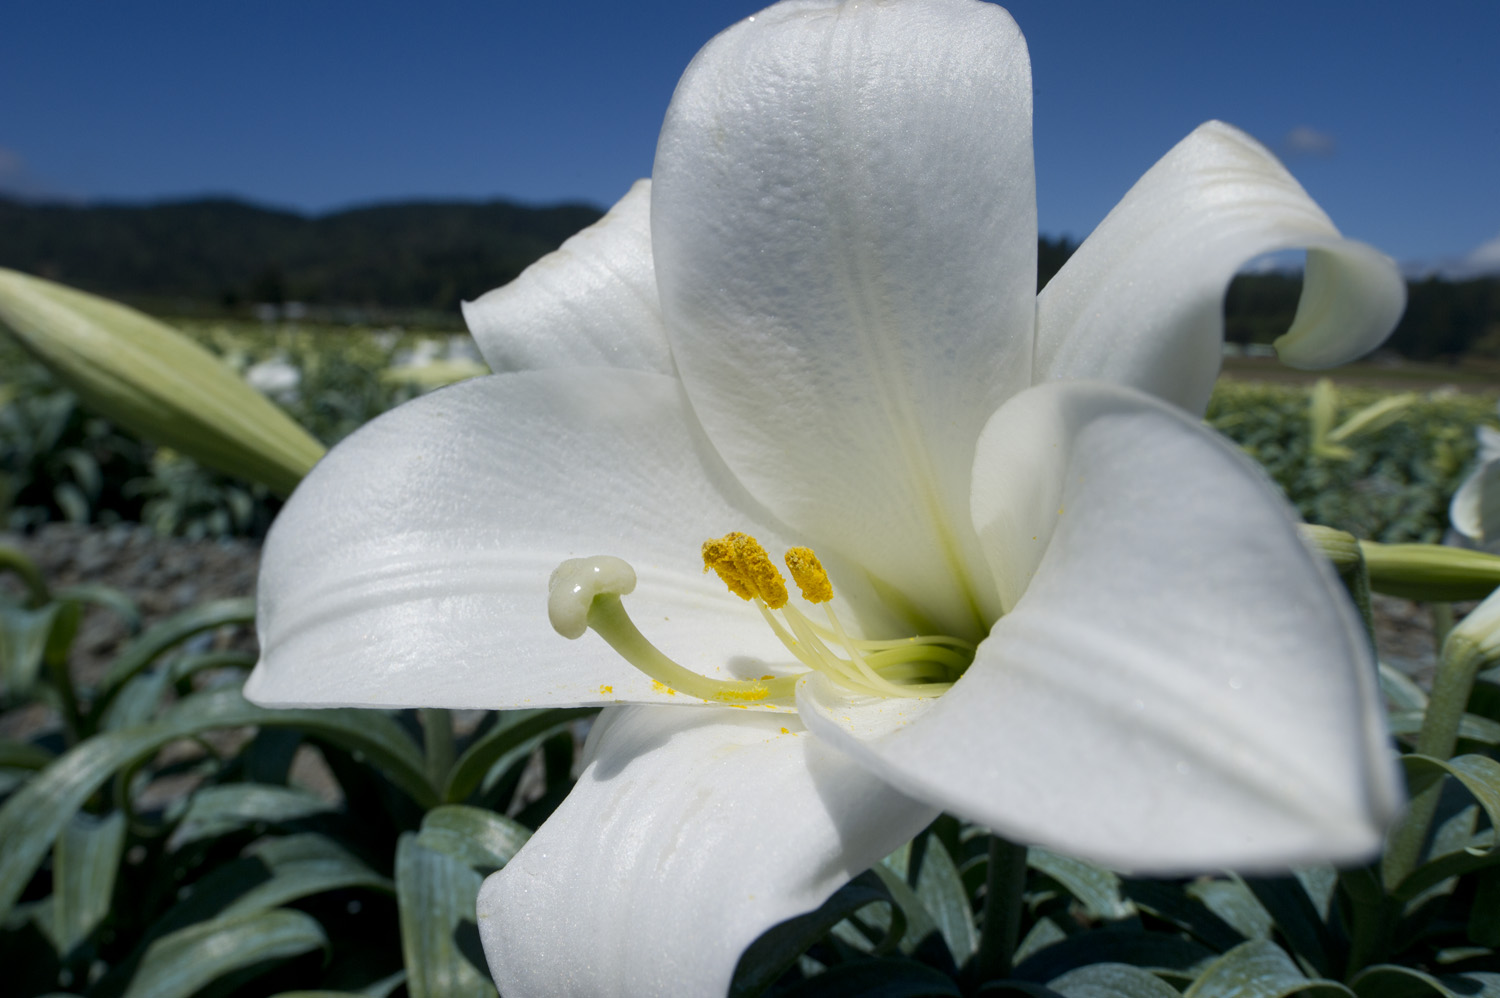 Passion Moon - Orienpet Hybrid Lily Bulb